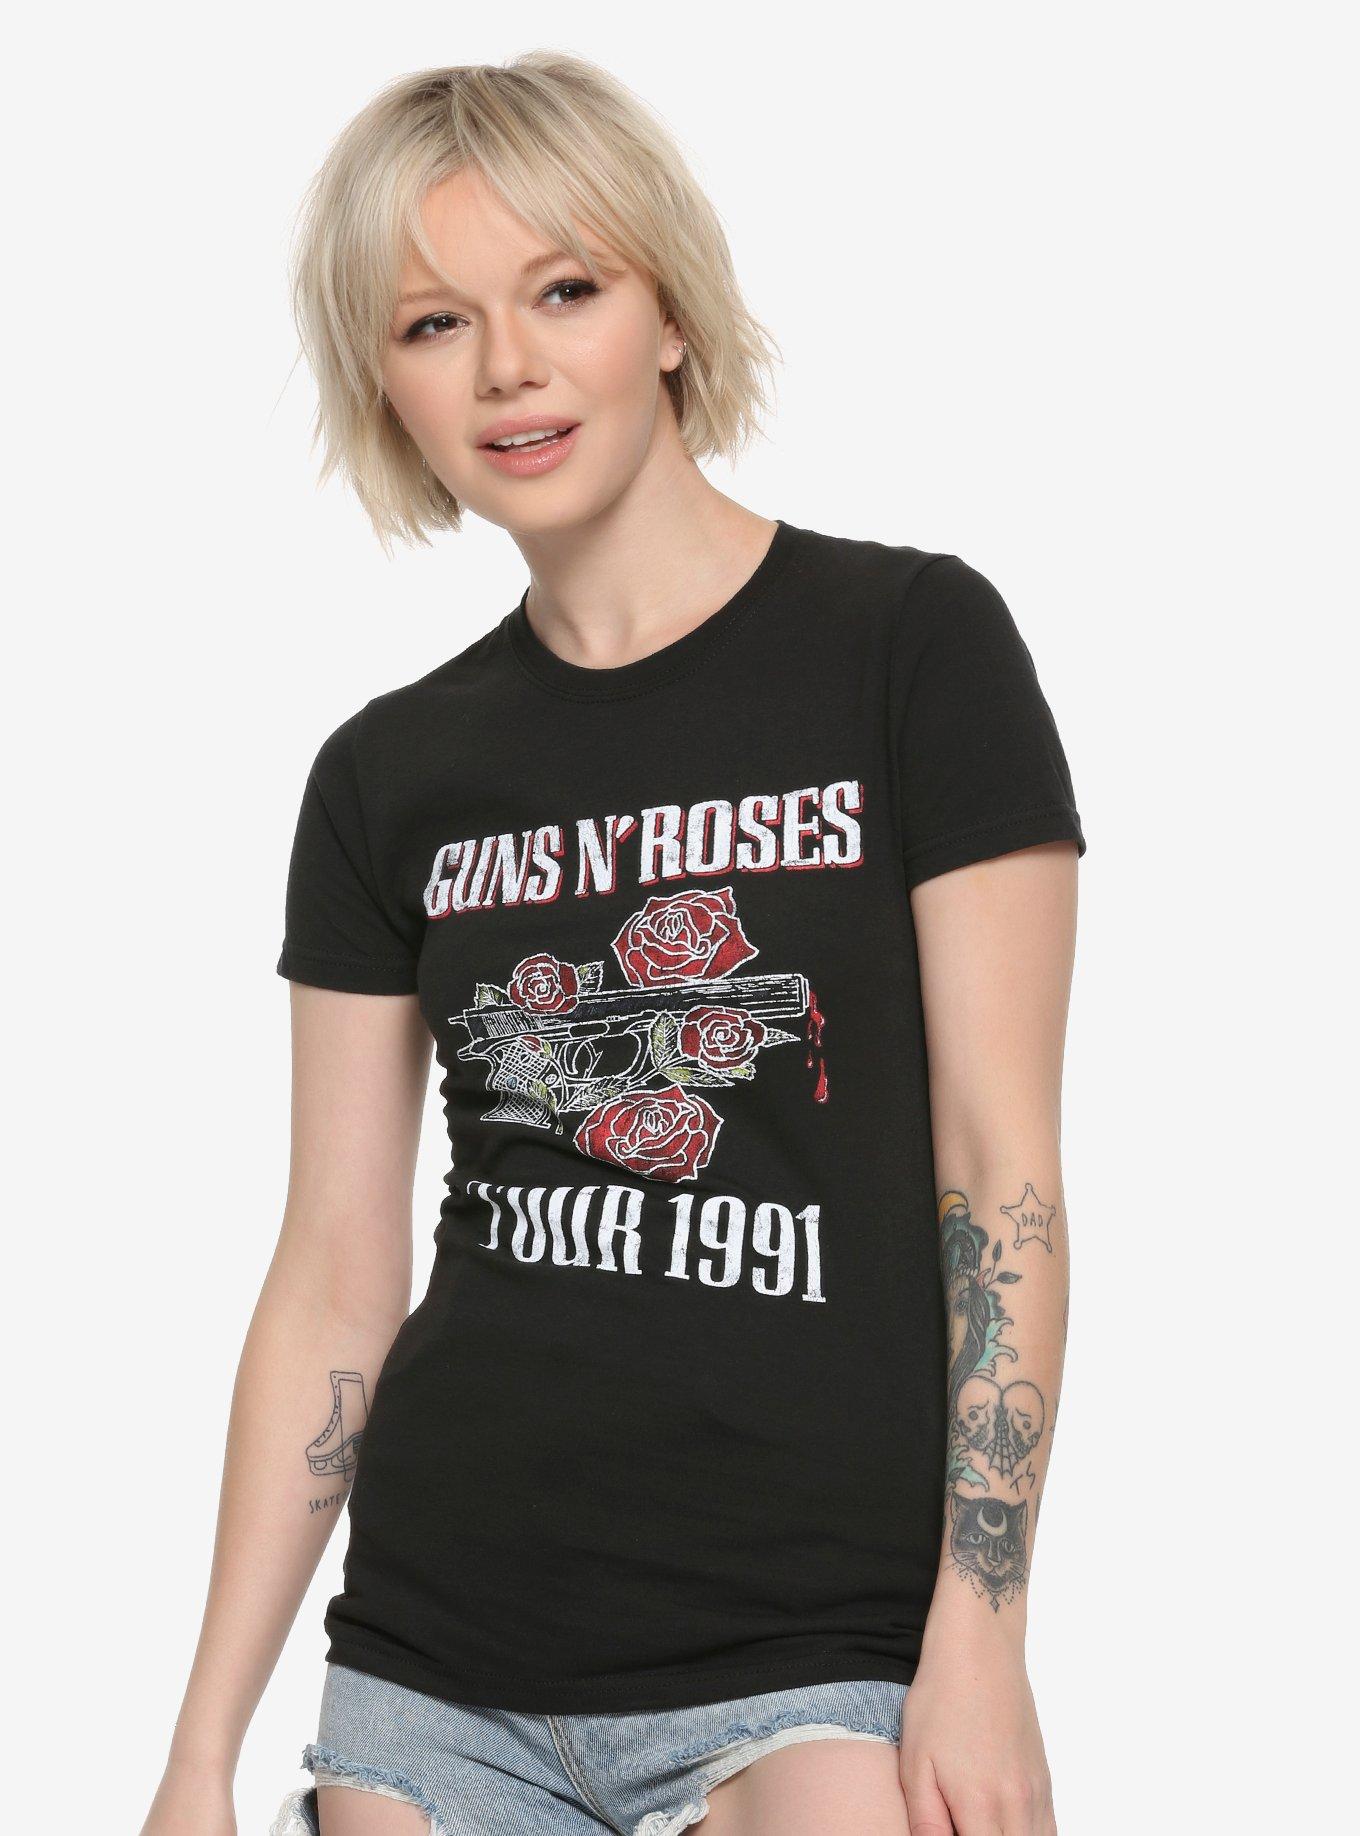 Guns N' Roses Tour 1991 Girls T-Shirt, BLACK, hi-res